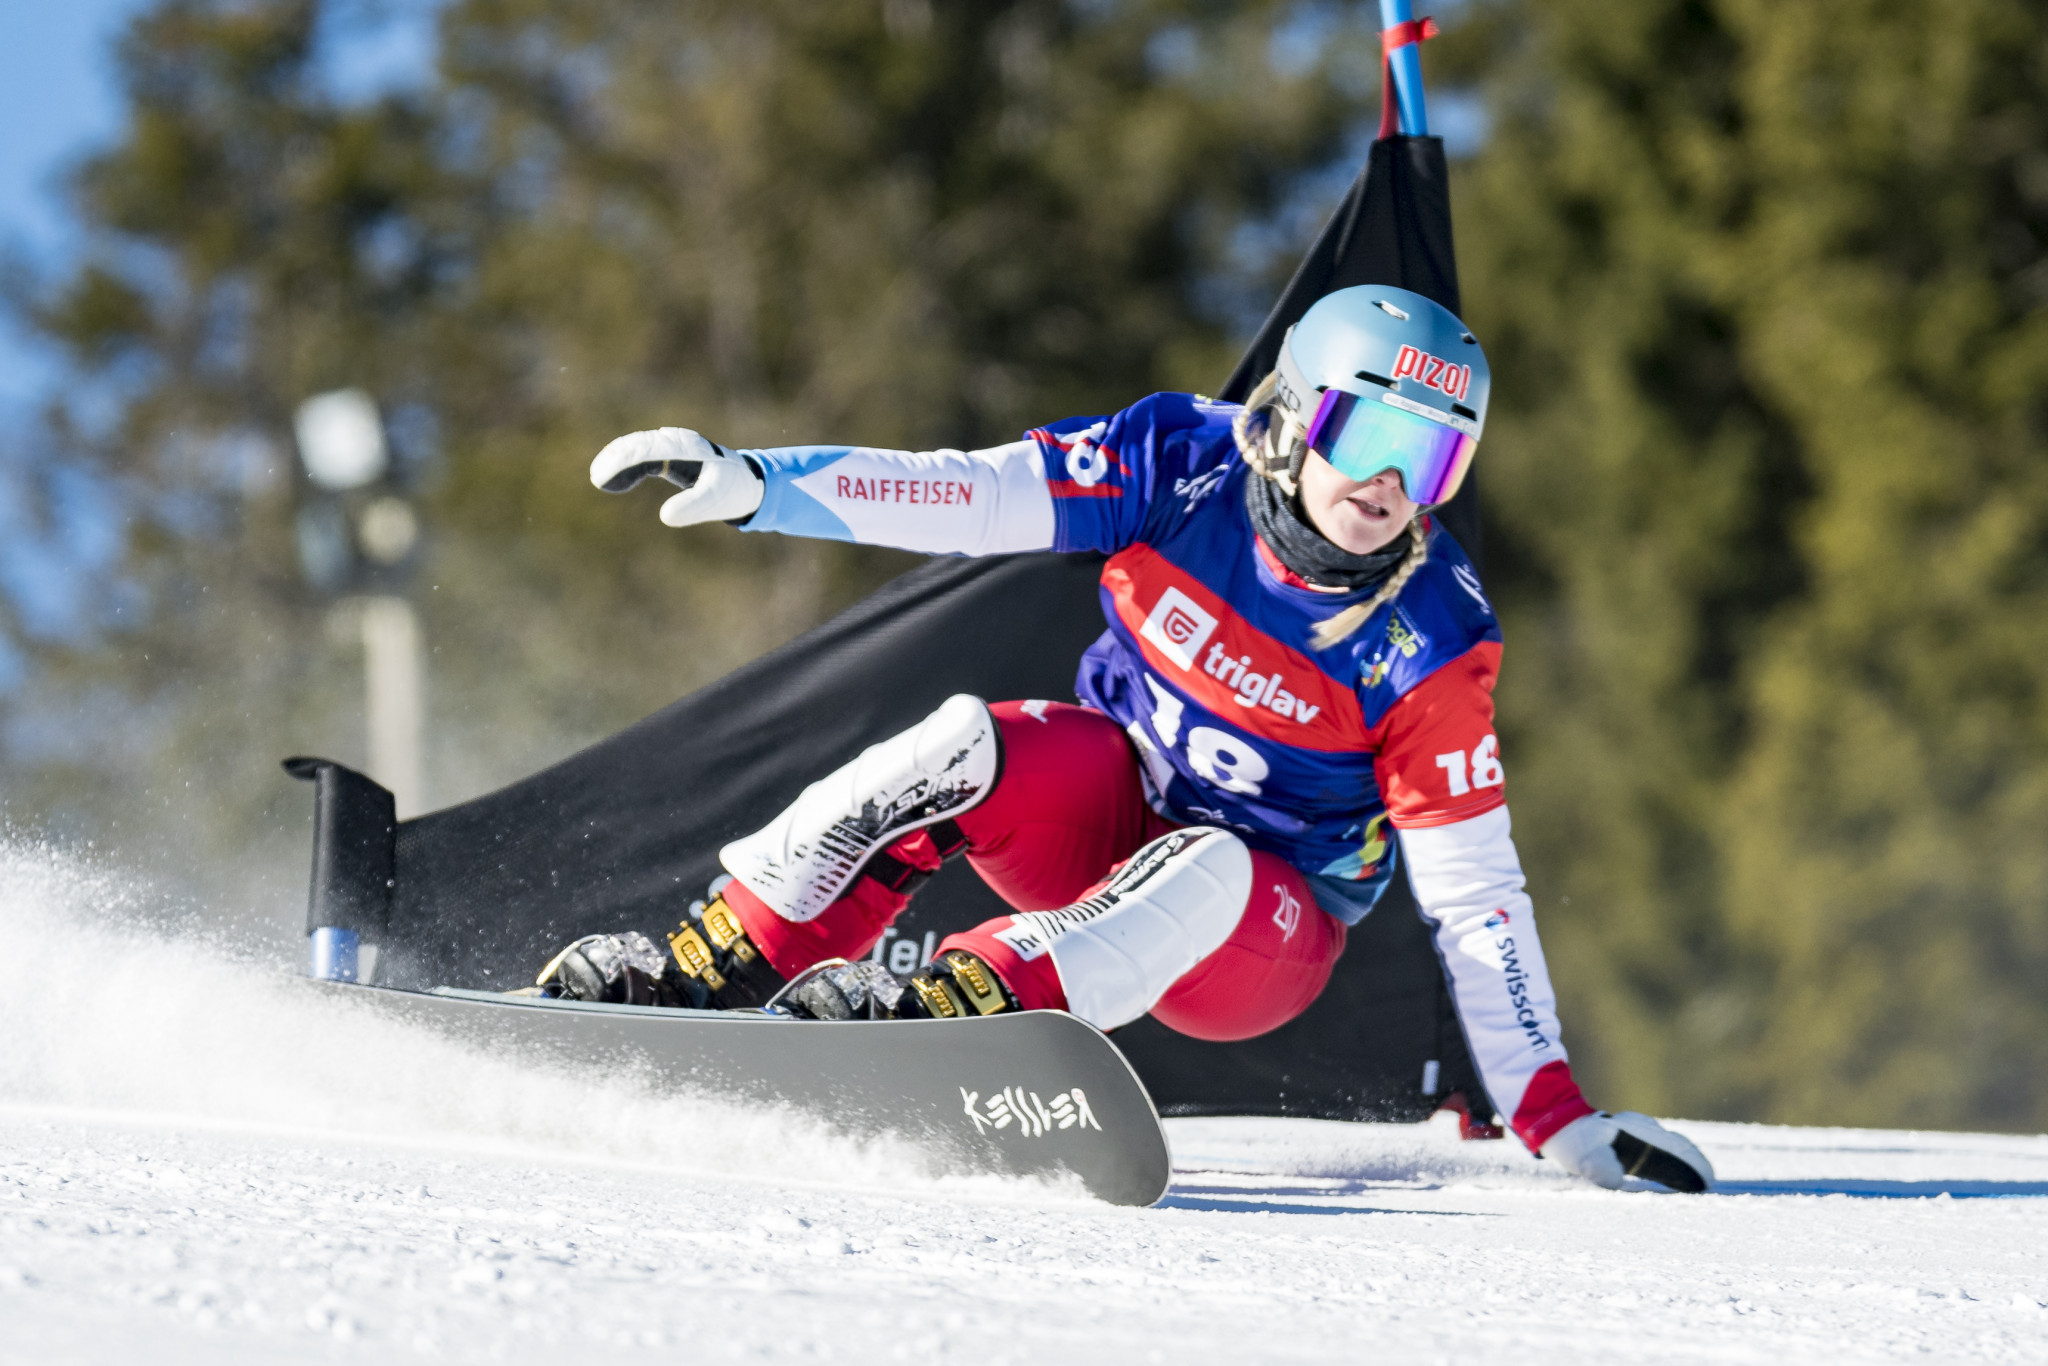 Zogg headlines Swiss team for new snowboard season